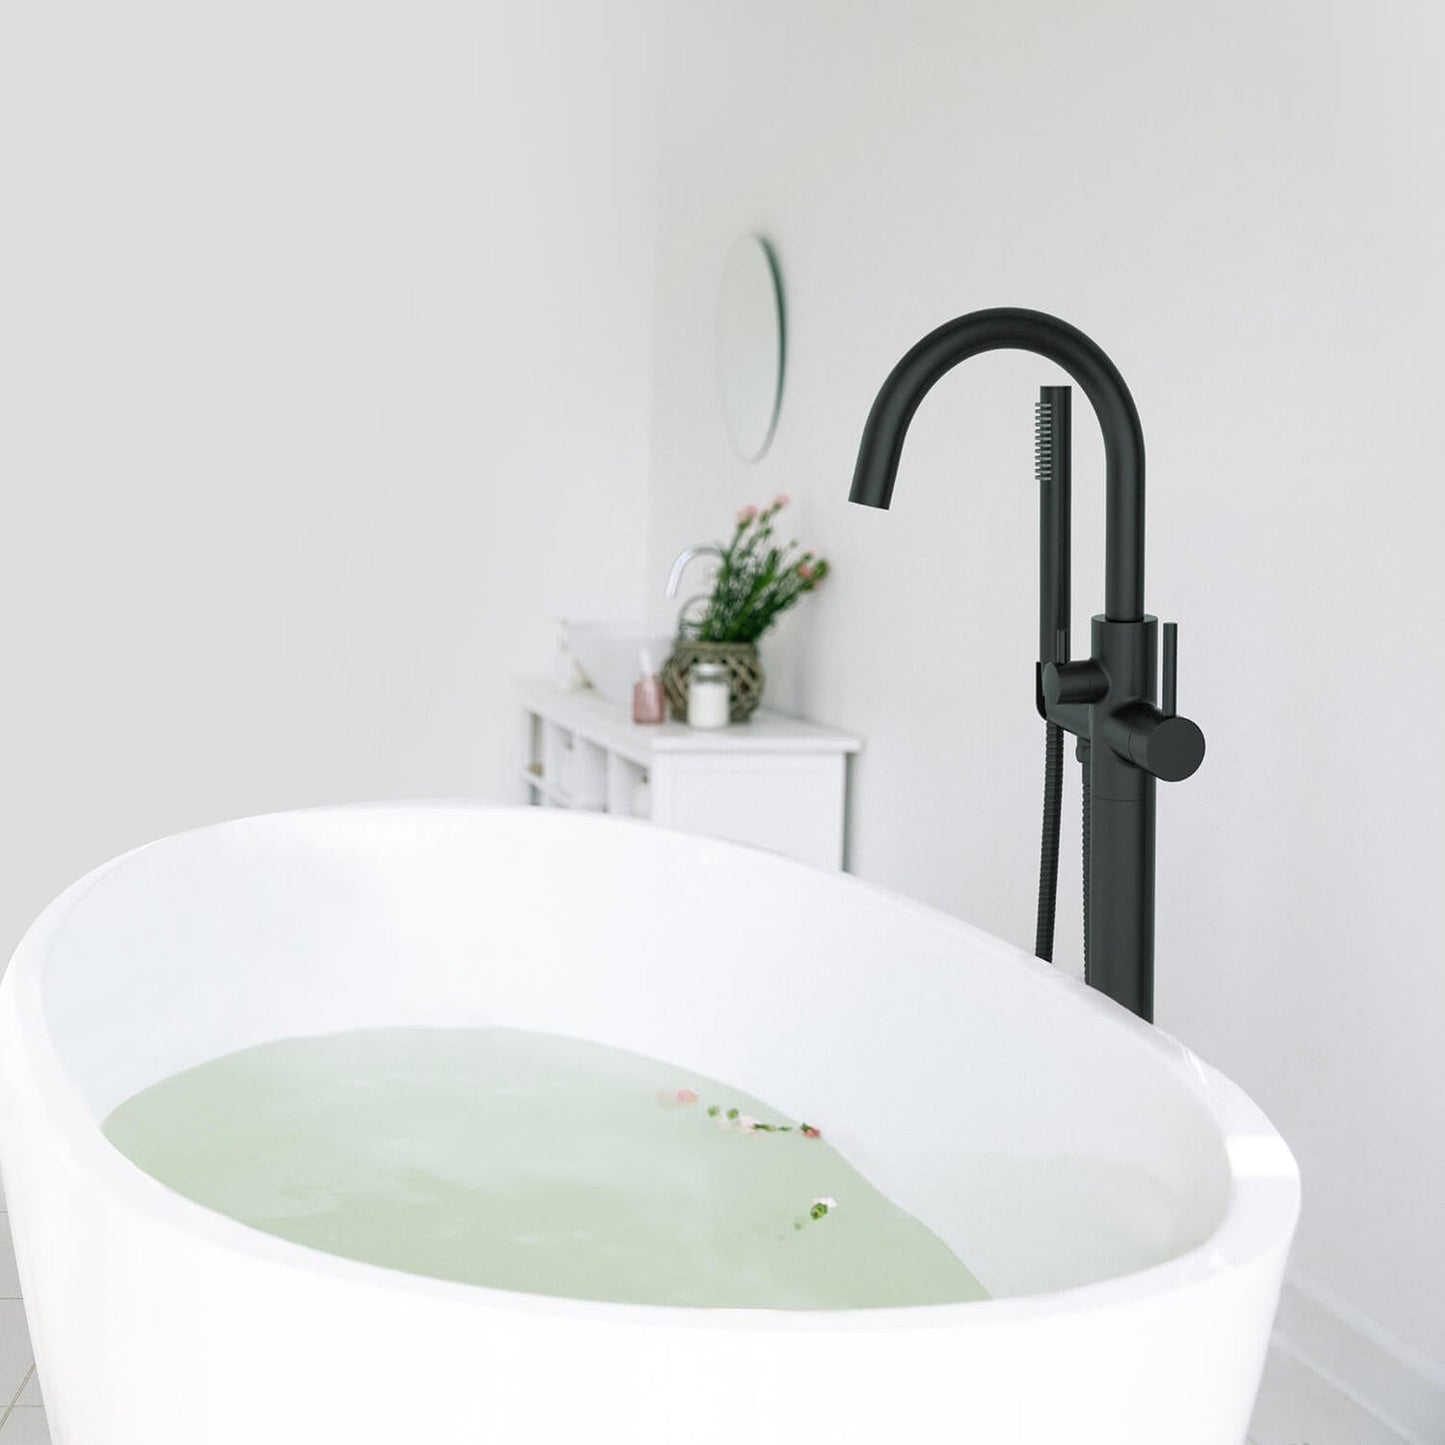 KIBI Circular Brass Single Handle Floor Mounted Freestanding Tub Filler With Hand Shower in Matte Black Finish